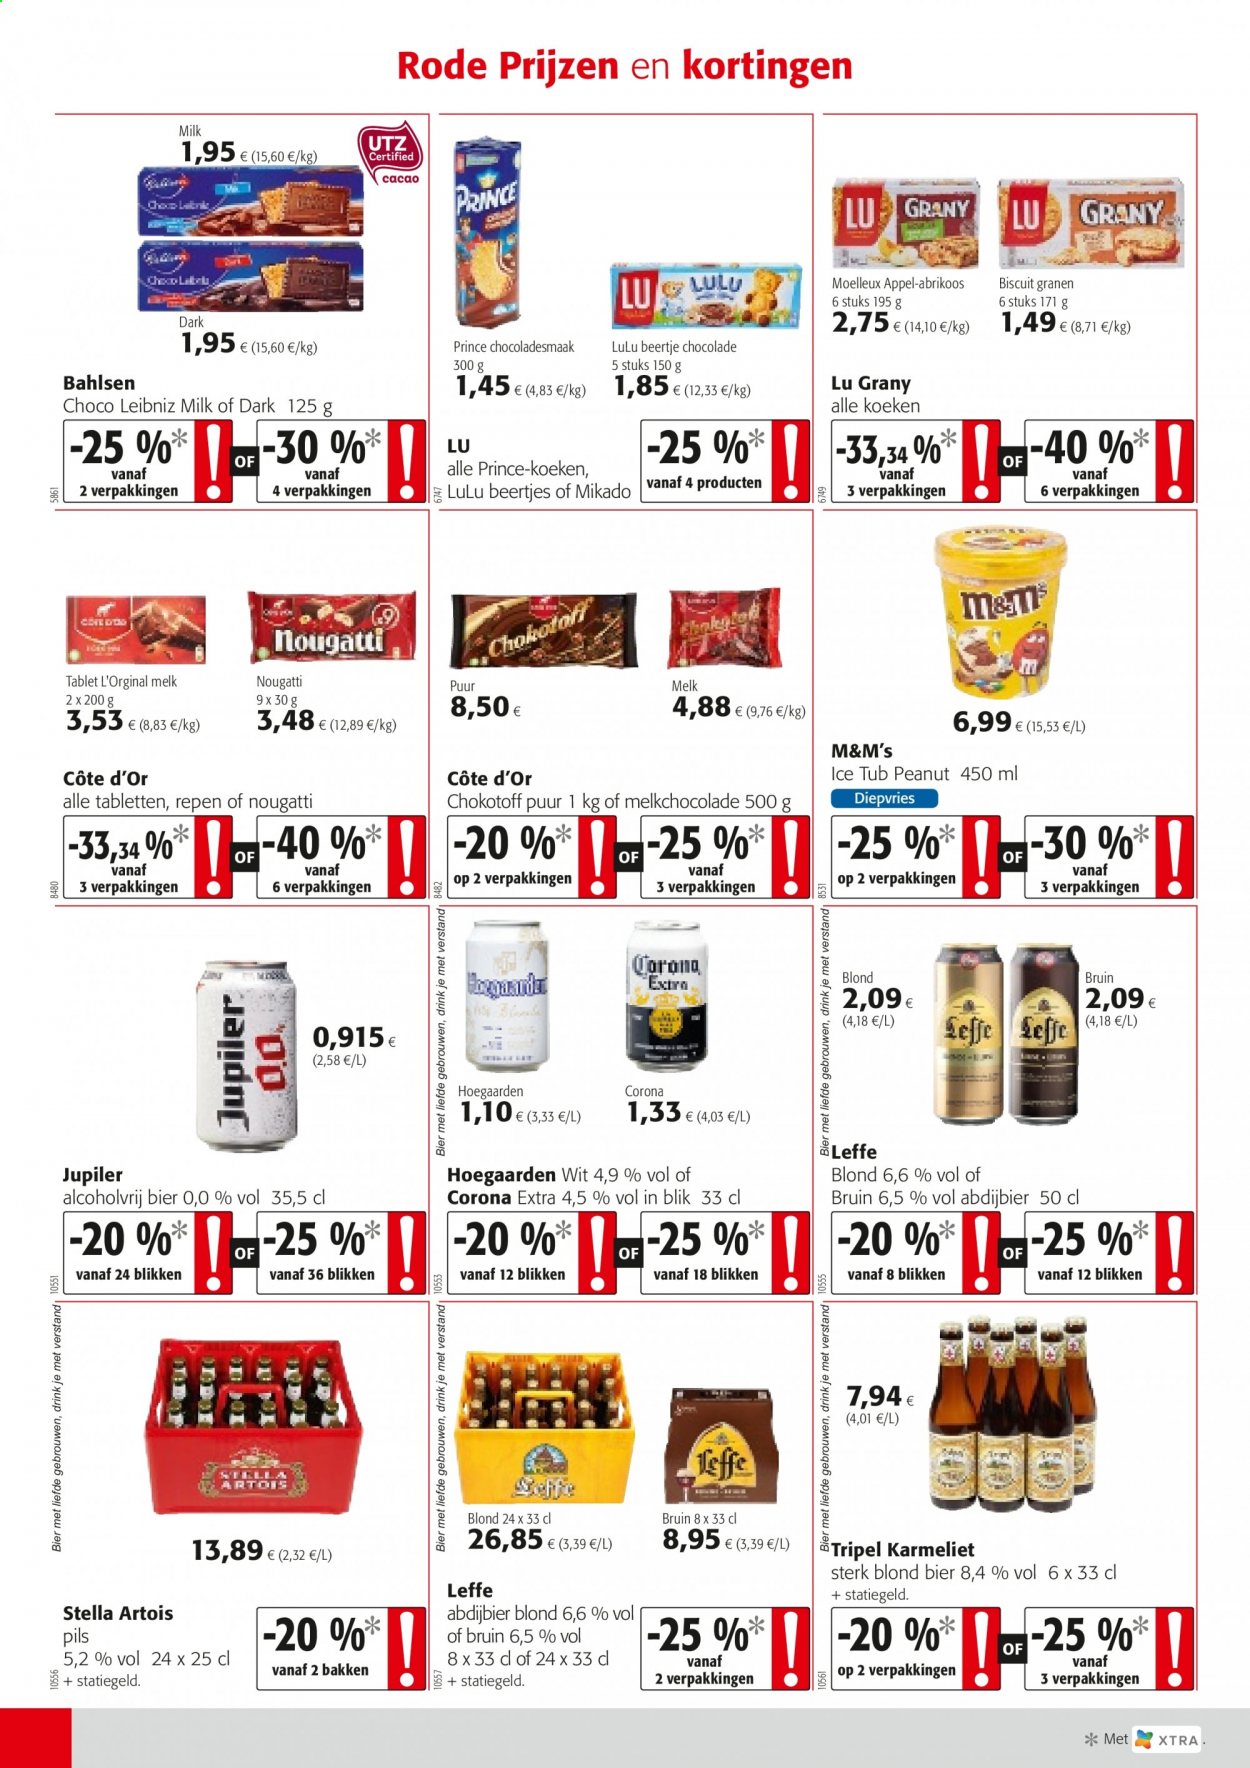 thumbnail - Colruyt-aanbieding - 05/05/2021 - 18/05/2021 -  producten in de aanbieding - appels, chocolade, melk, melkchocolade, Stella Artois, Leffe, M&M's, Jupiler. Pagina 4.